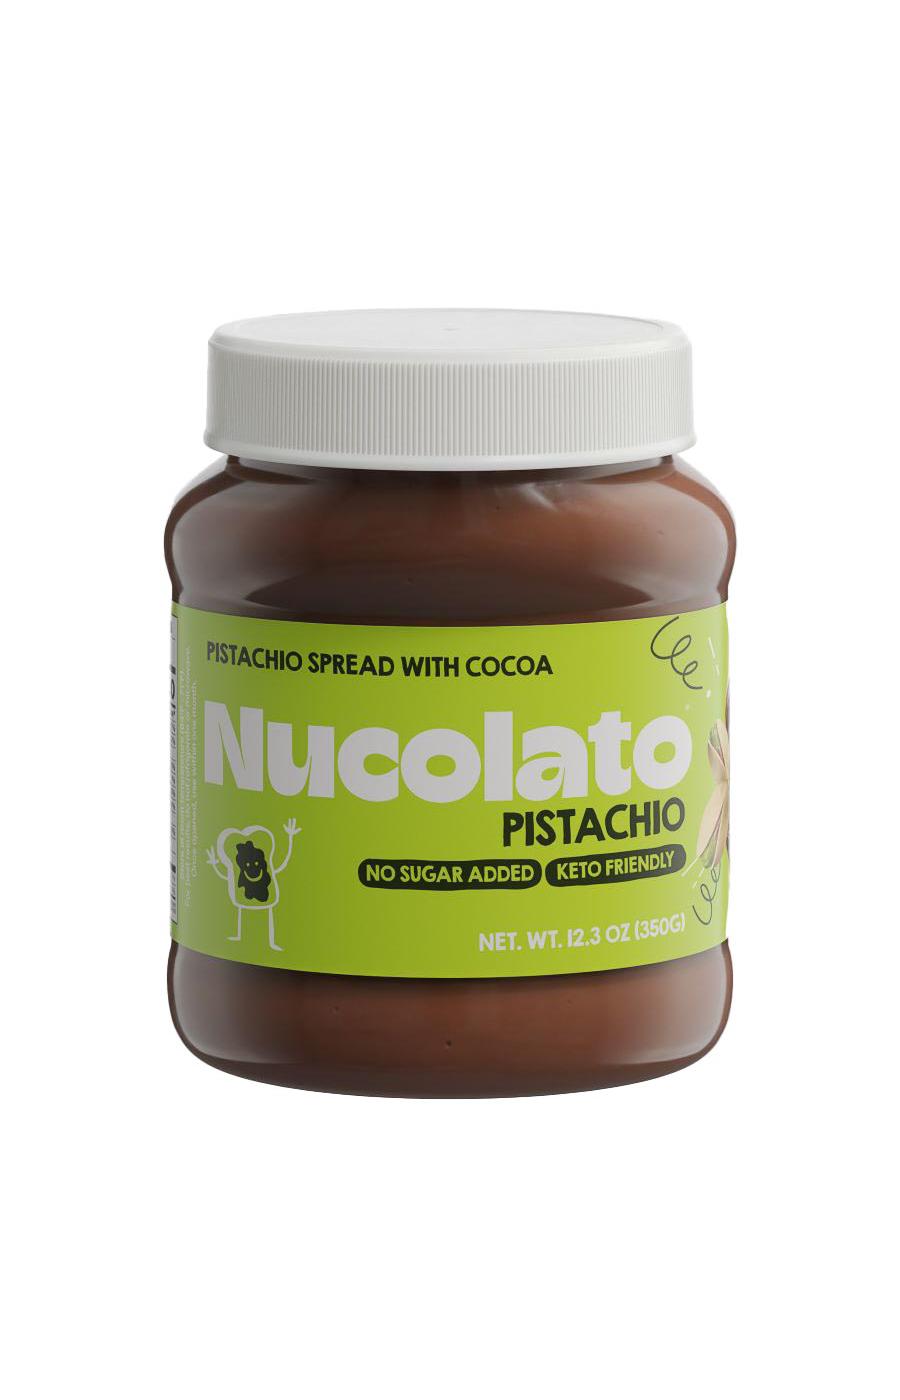 Nucolato Pistachio Spread - Chocolate; image 1 of 2